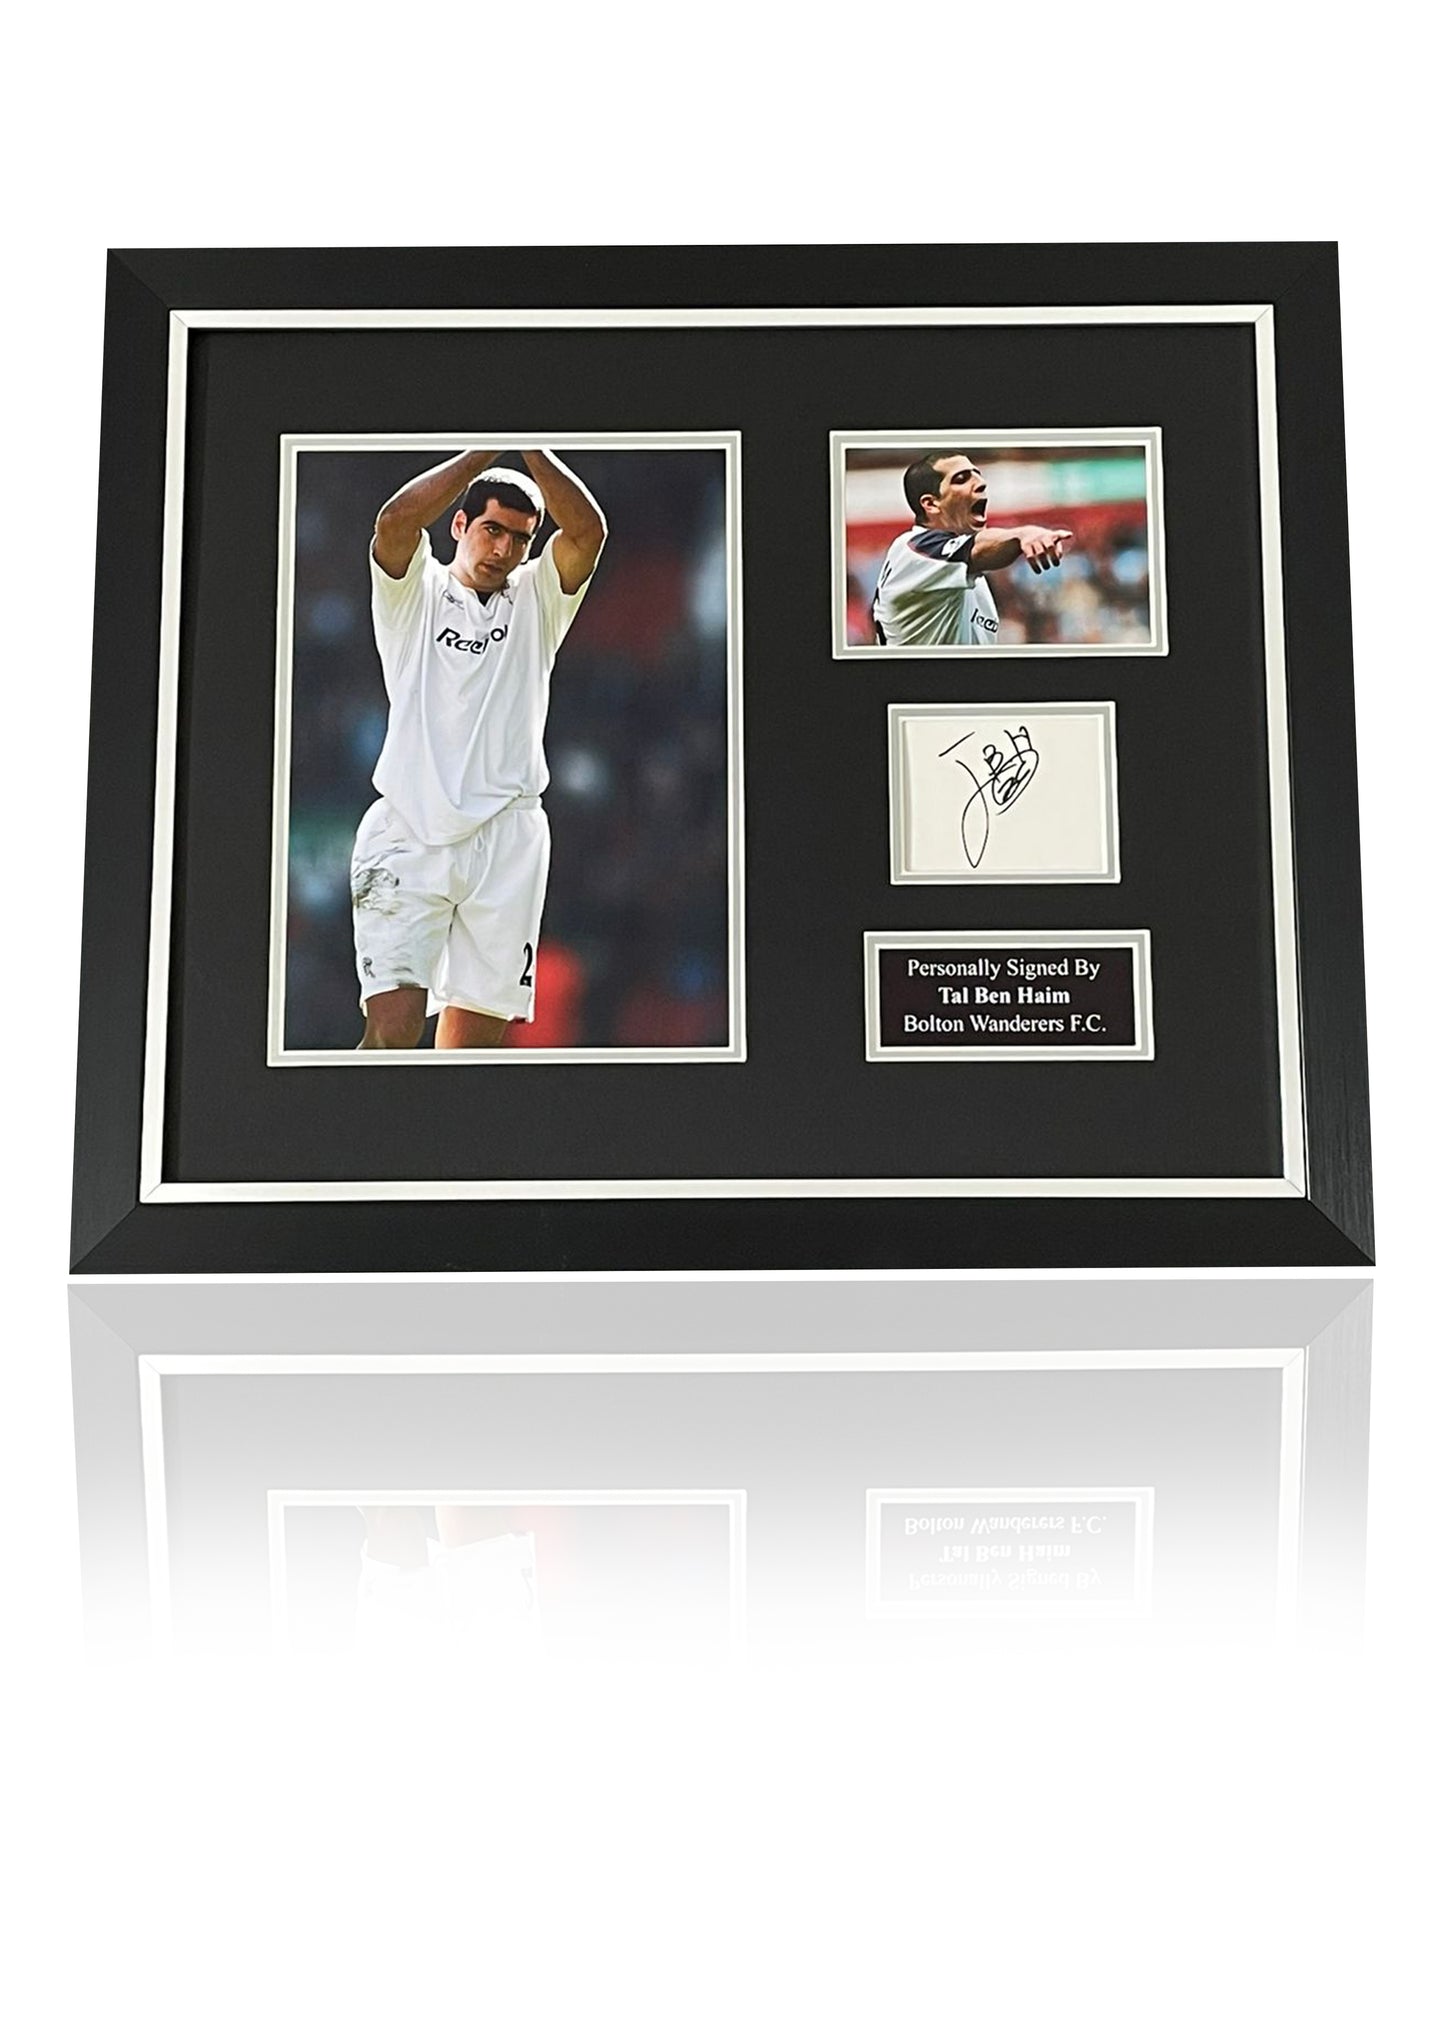 Tal Ben Haim Bolton Wanderers signed framed photo card montage